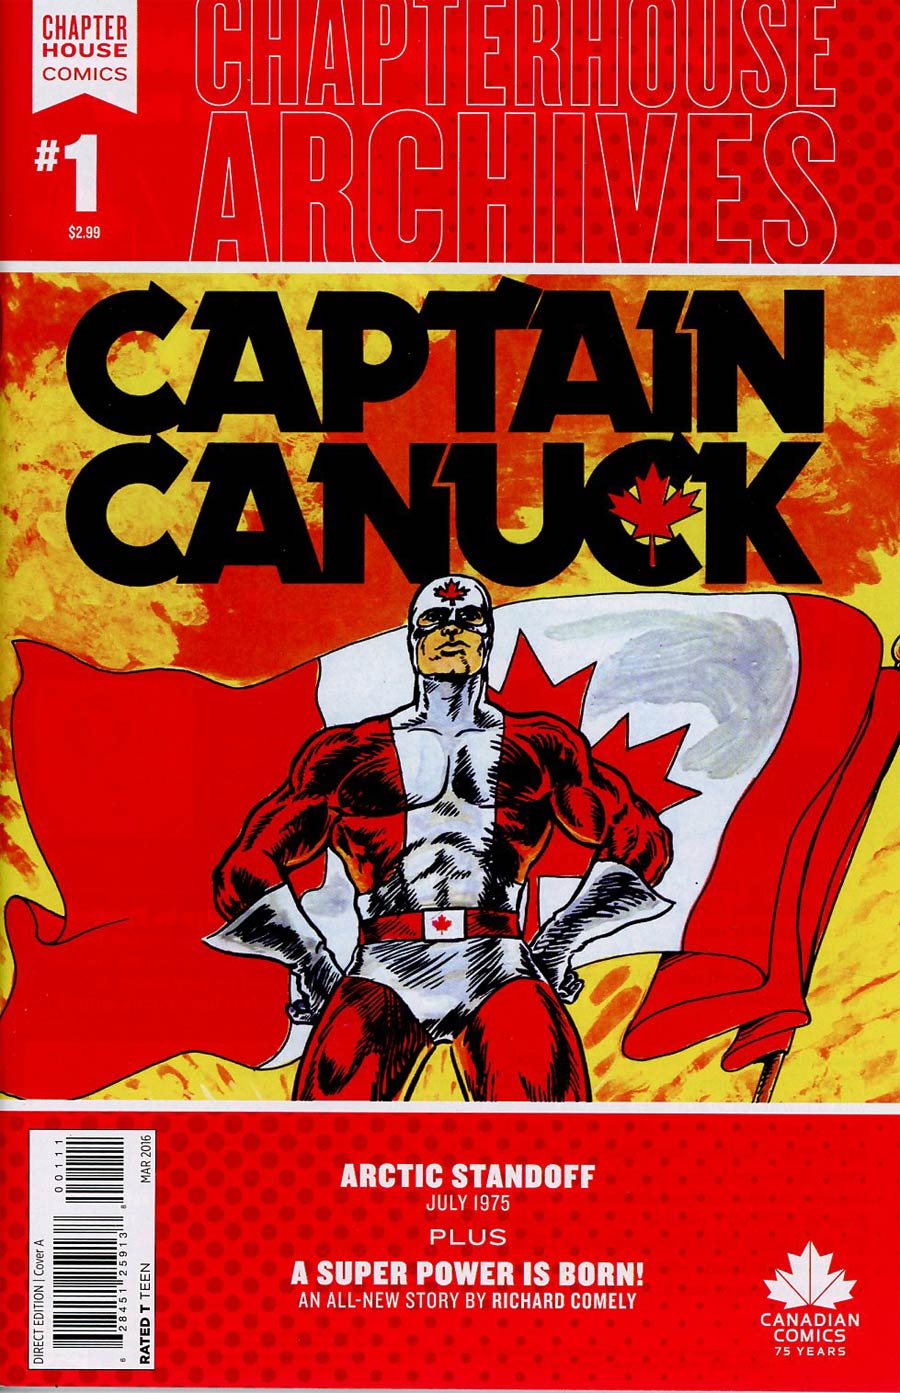 Chapterhouse Archives Captain Canuck #1